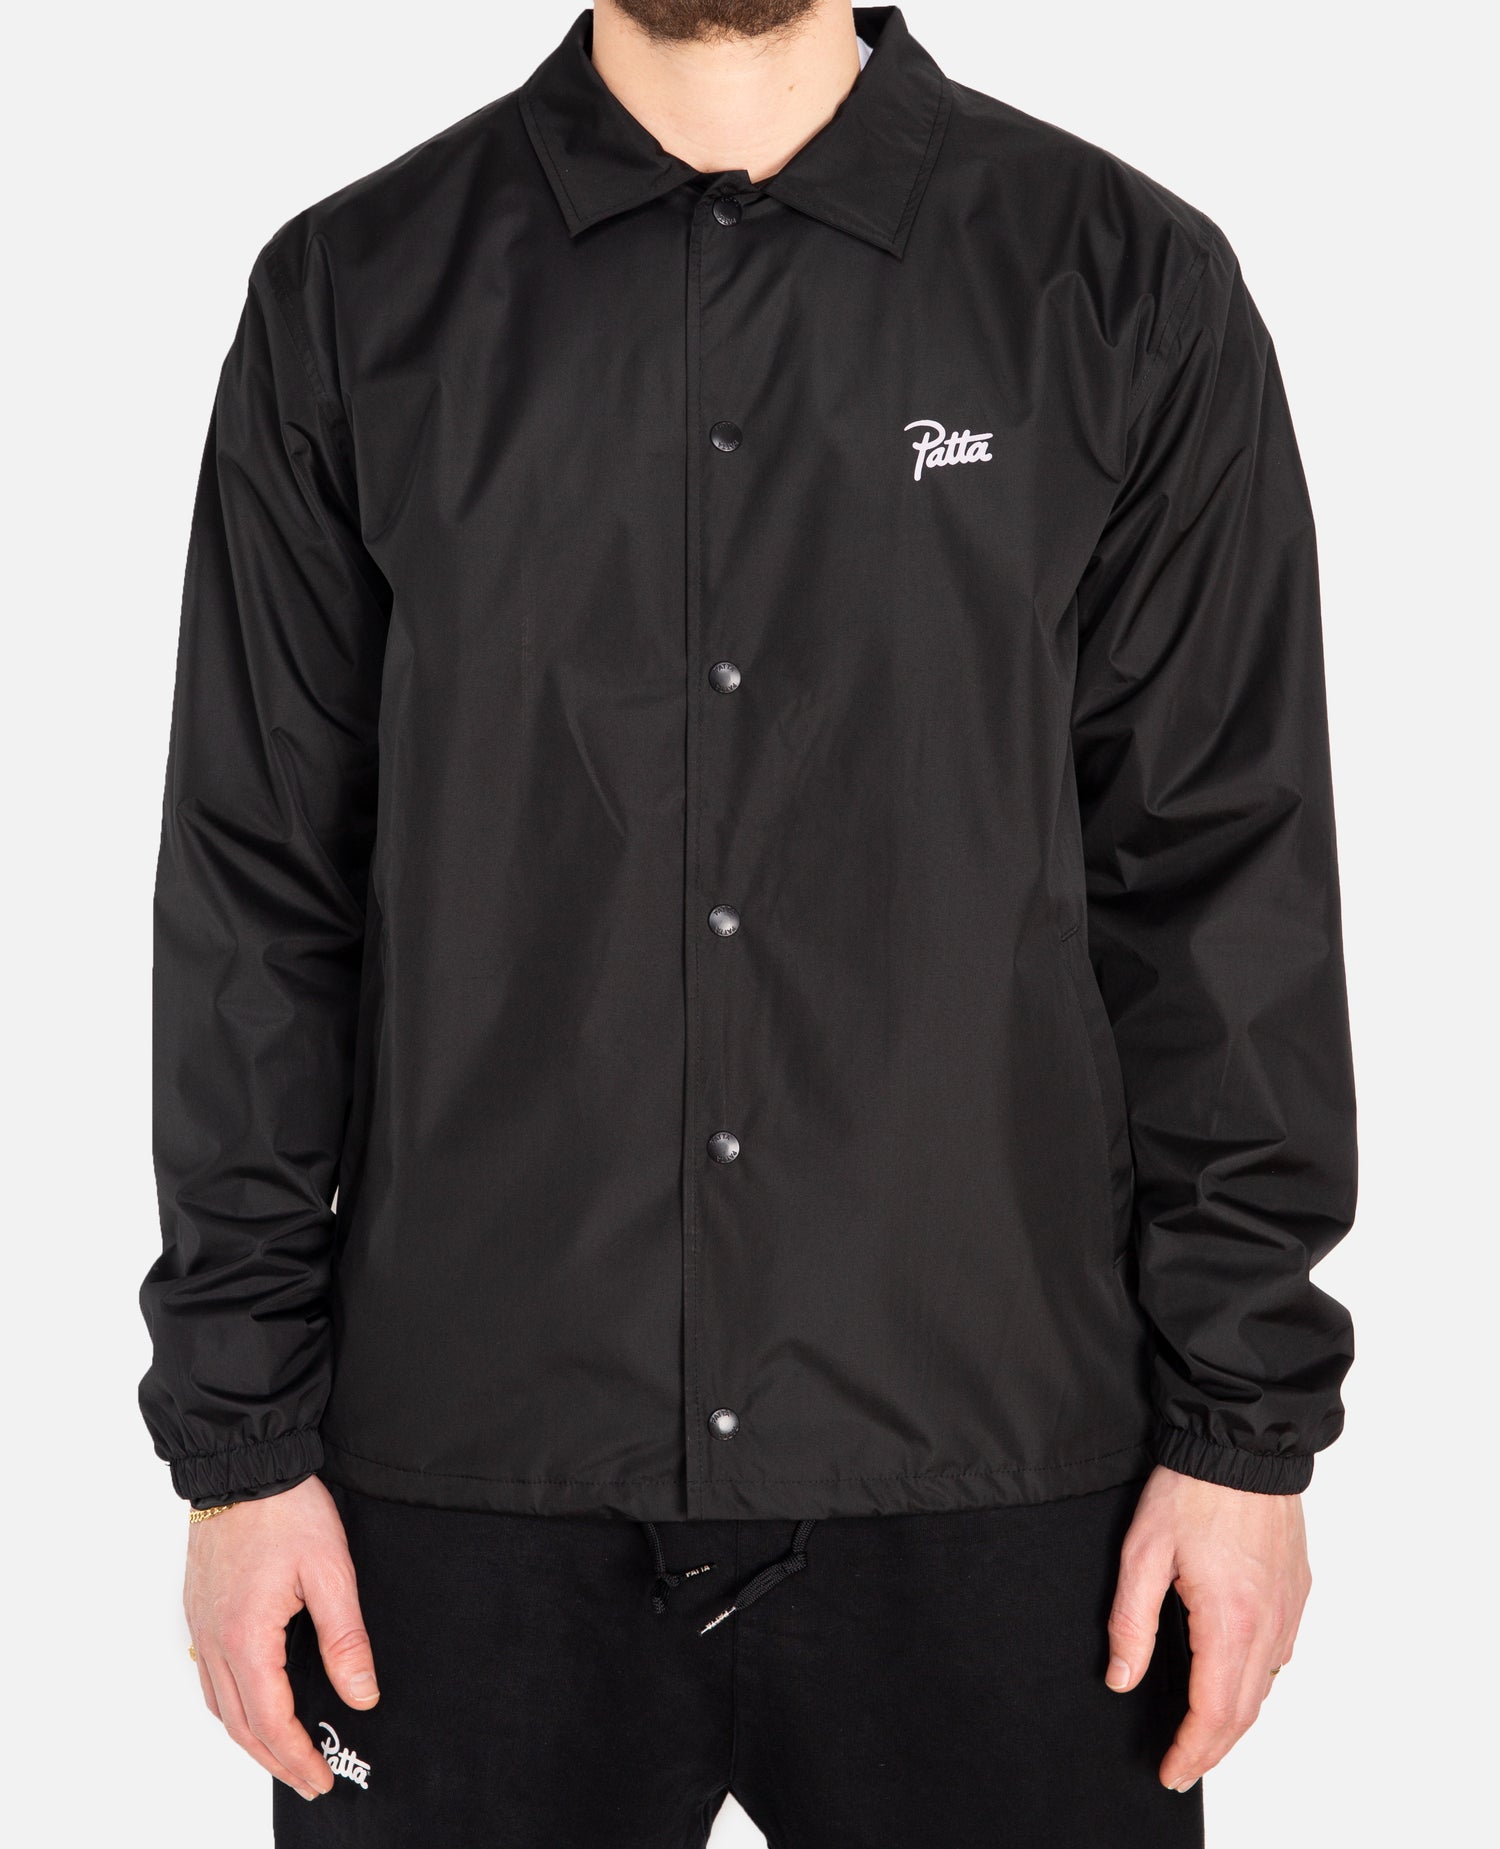 Patta Basic Coach Jacket (Black)